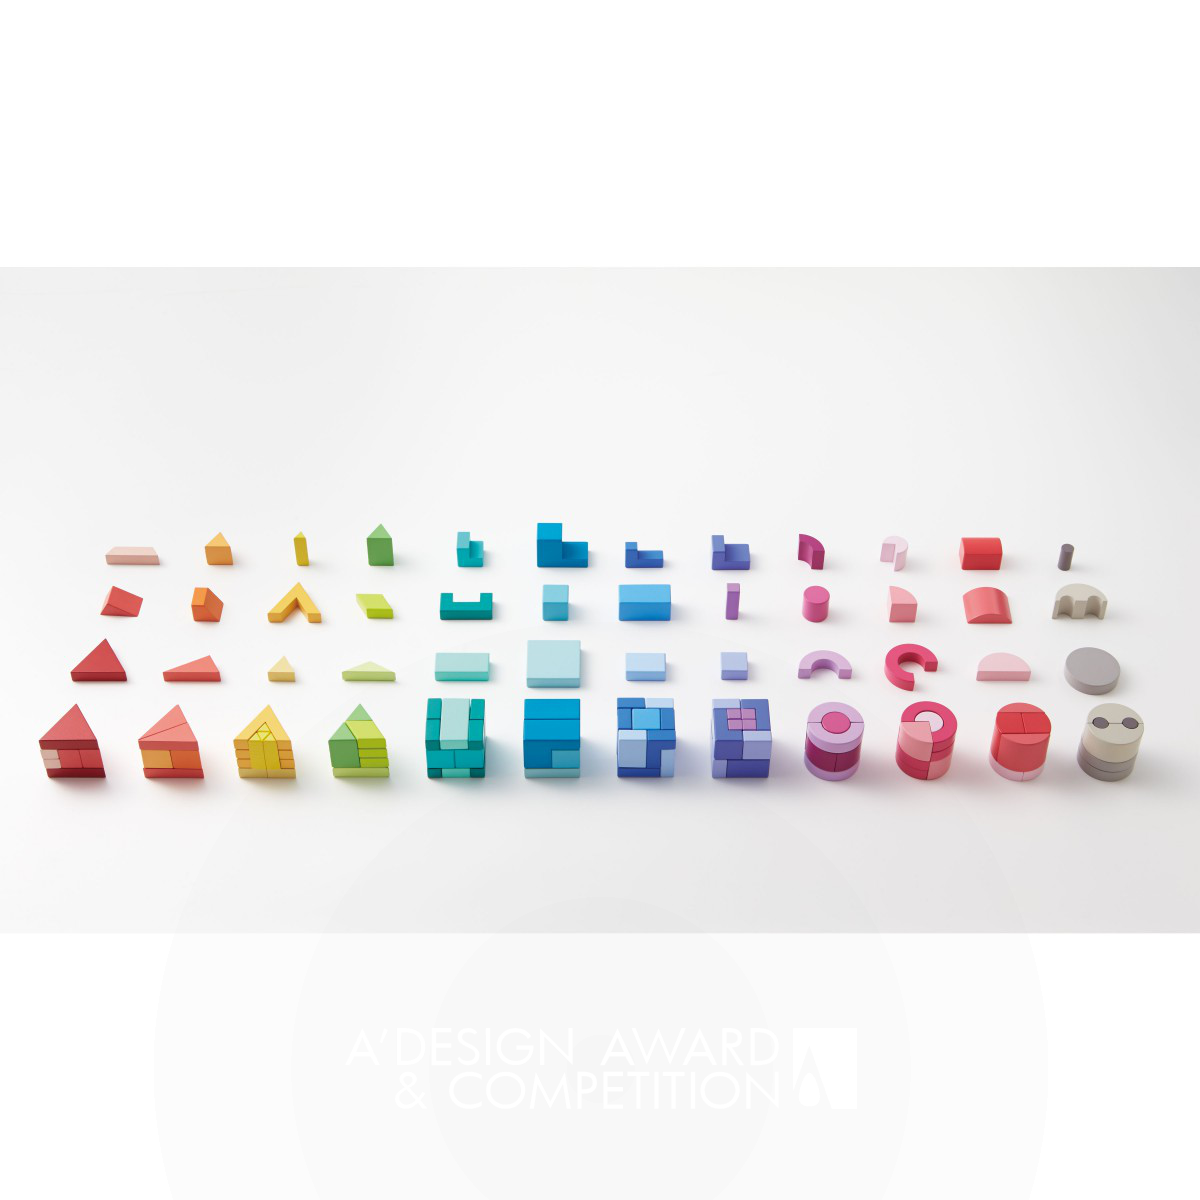 Kuum toy blocks by MARIE UNO